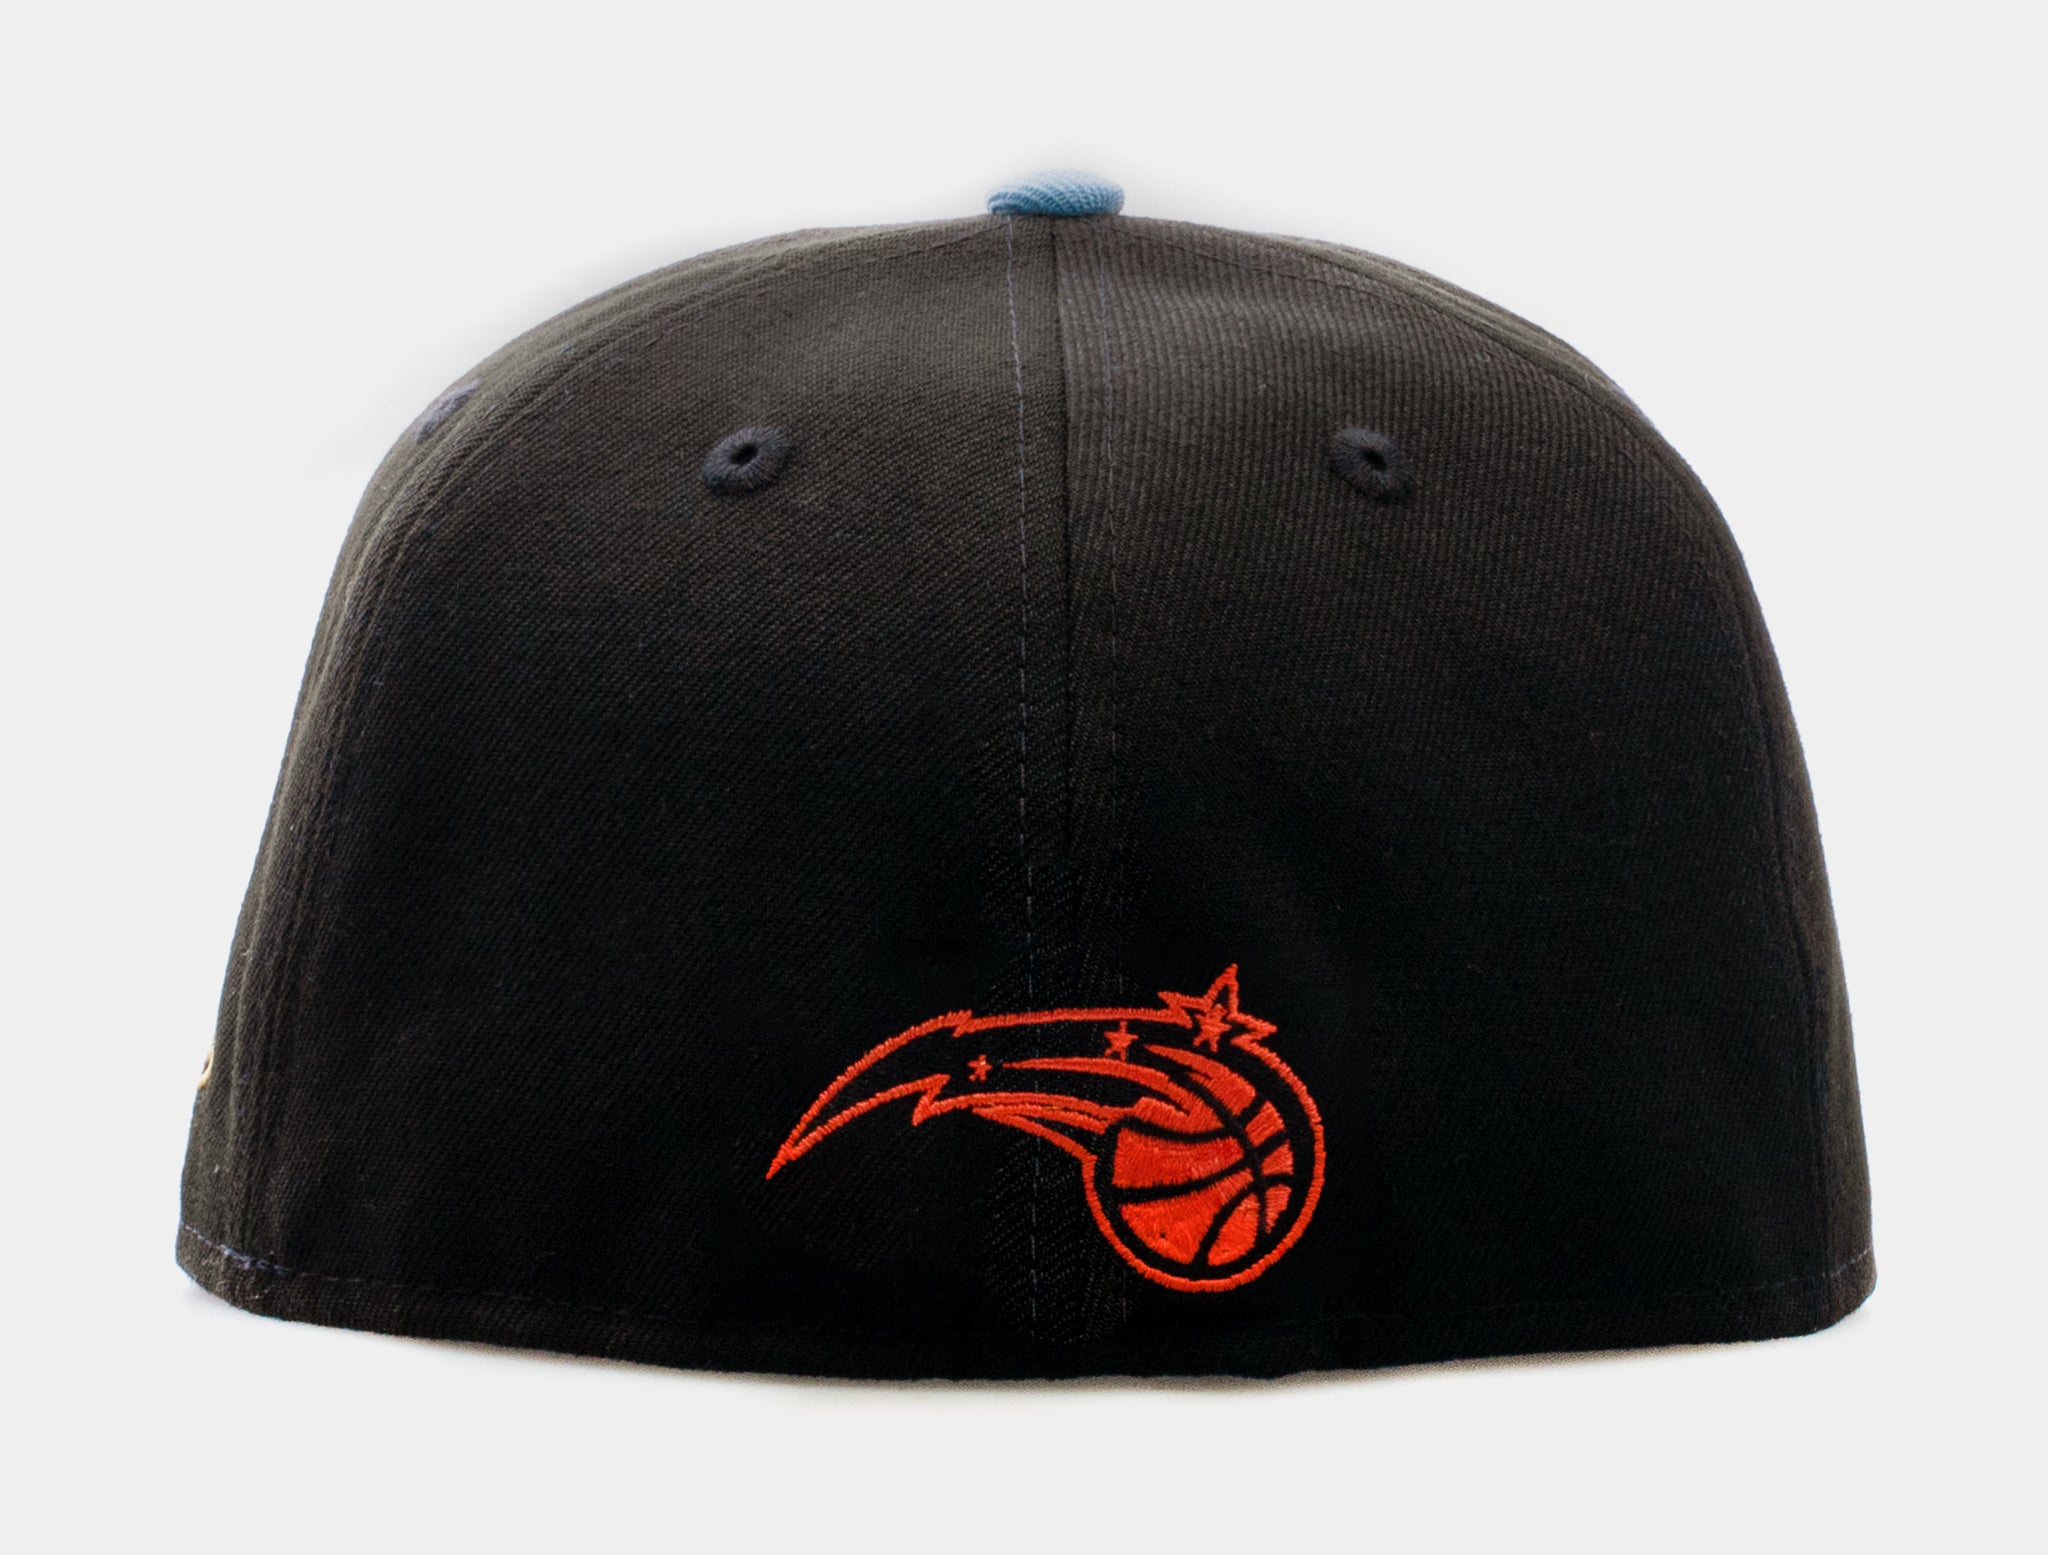 New Era Orlando Magic NBA Fan Cap, Hats for sale